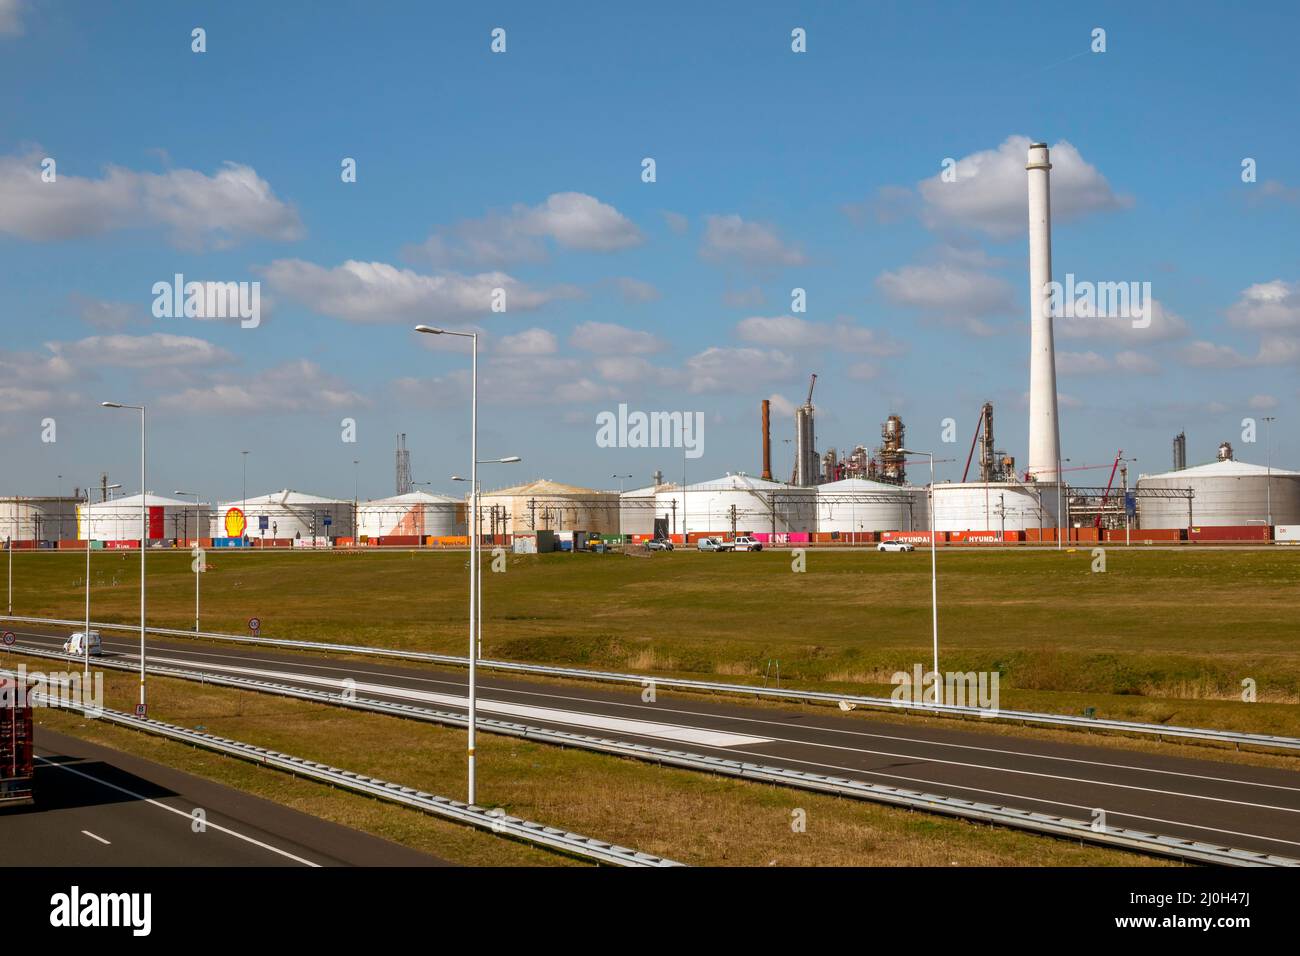 raffineria di conchiglie pernis nei pressi di rotterdam in olanda Foto Stock